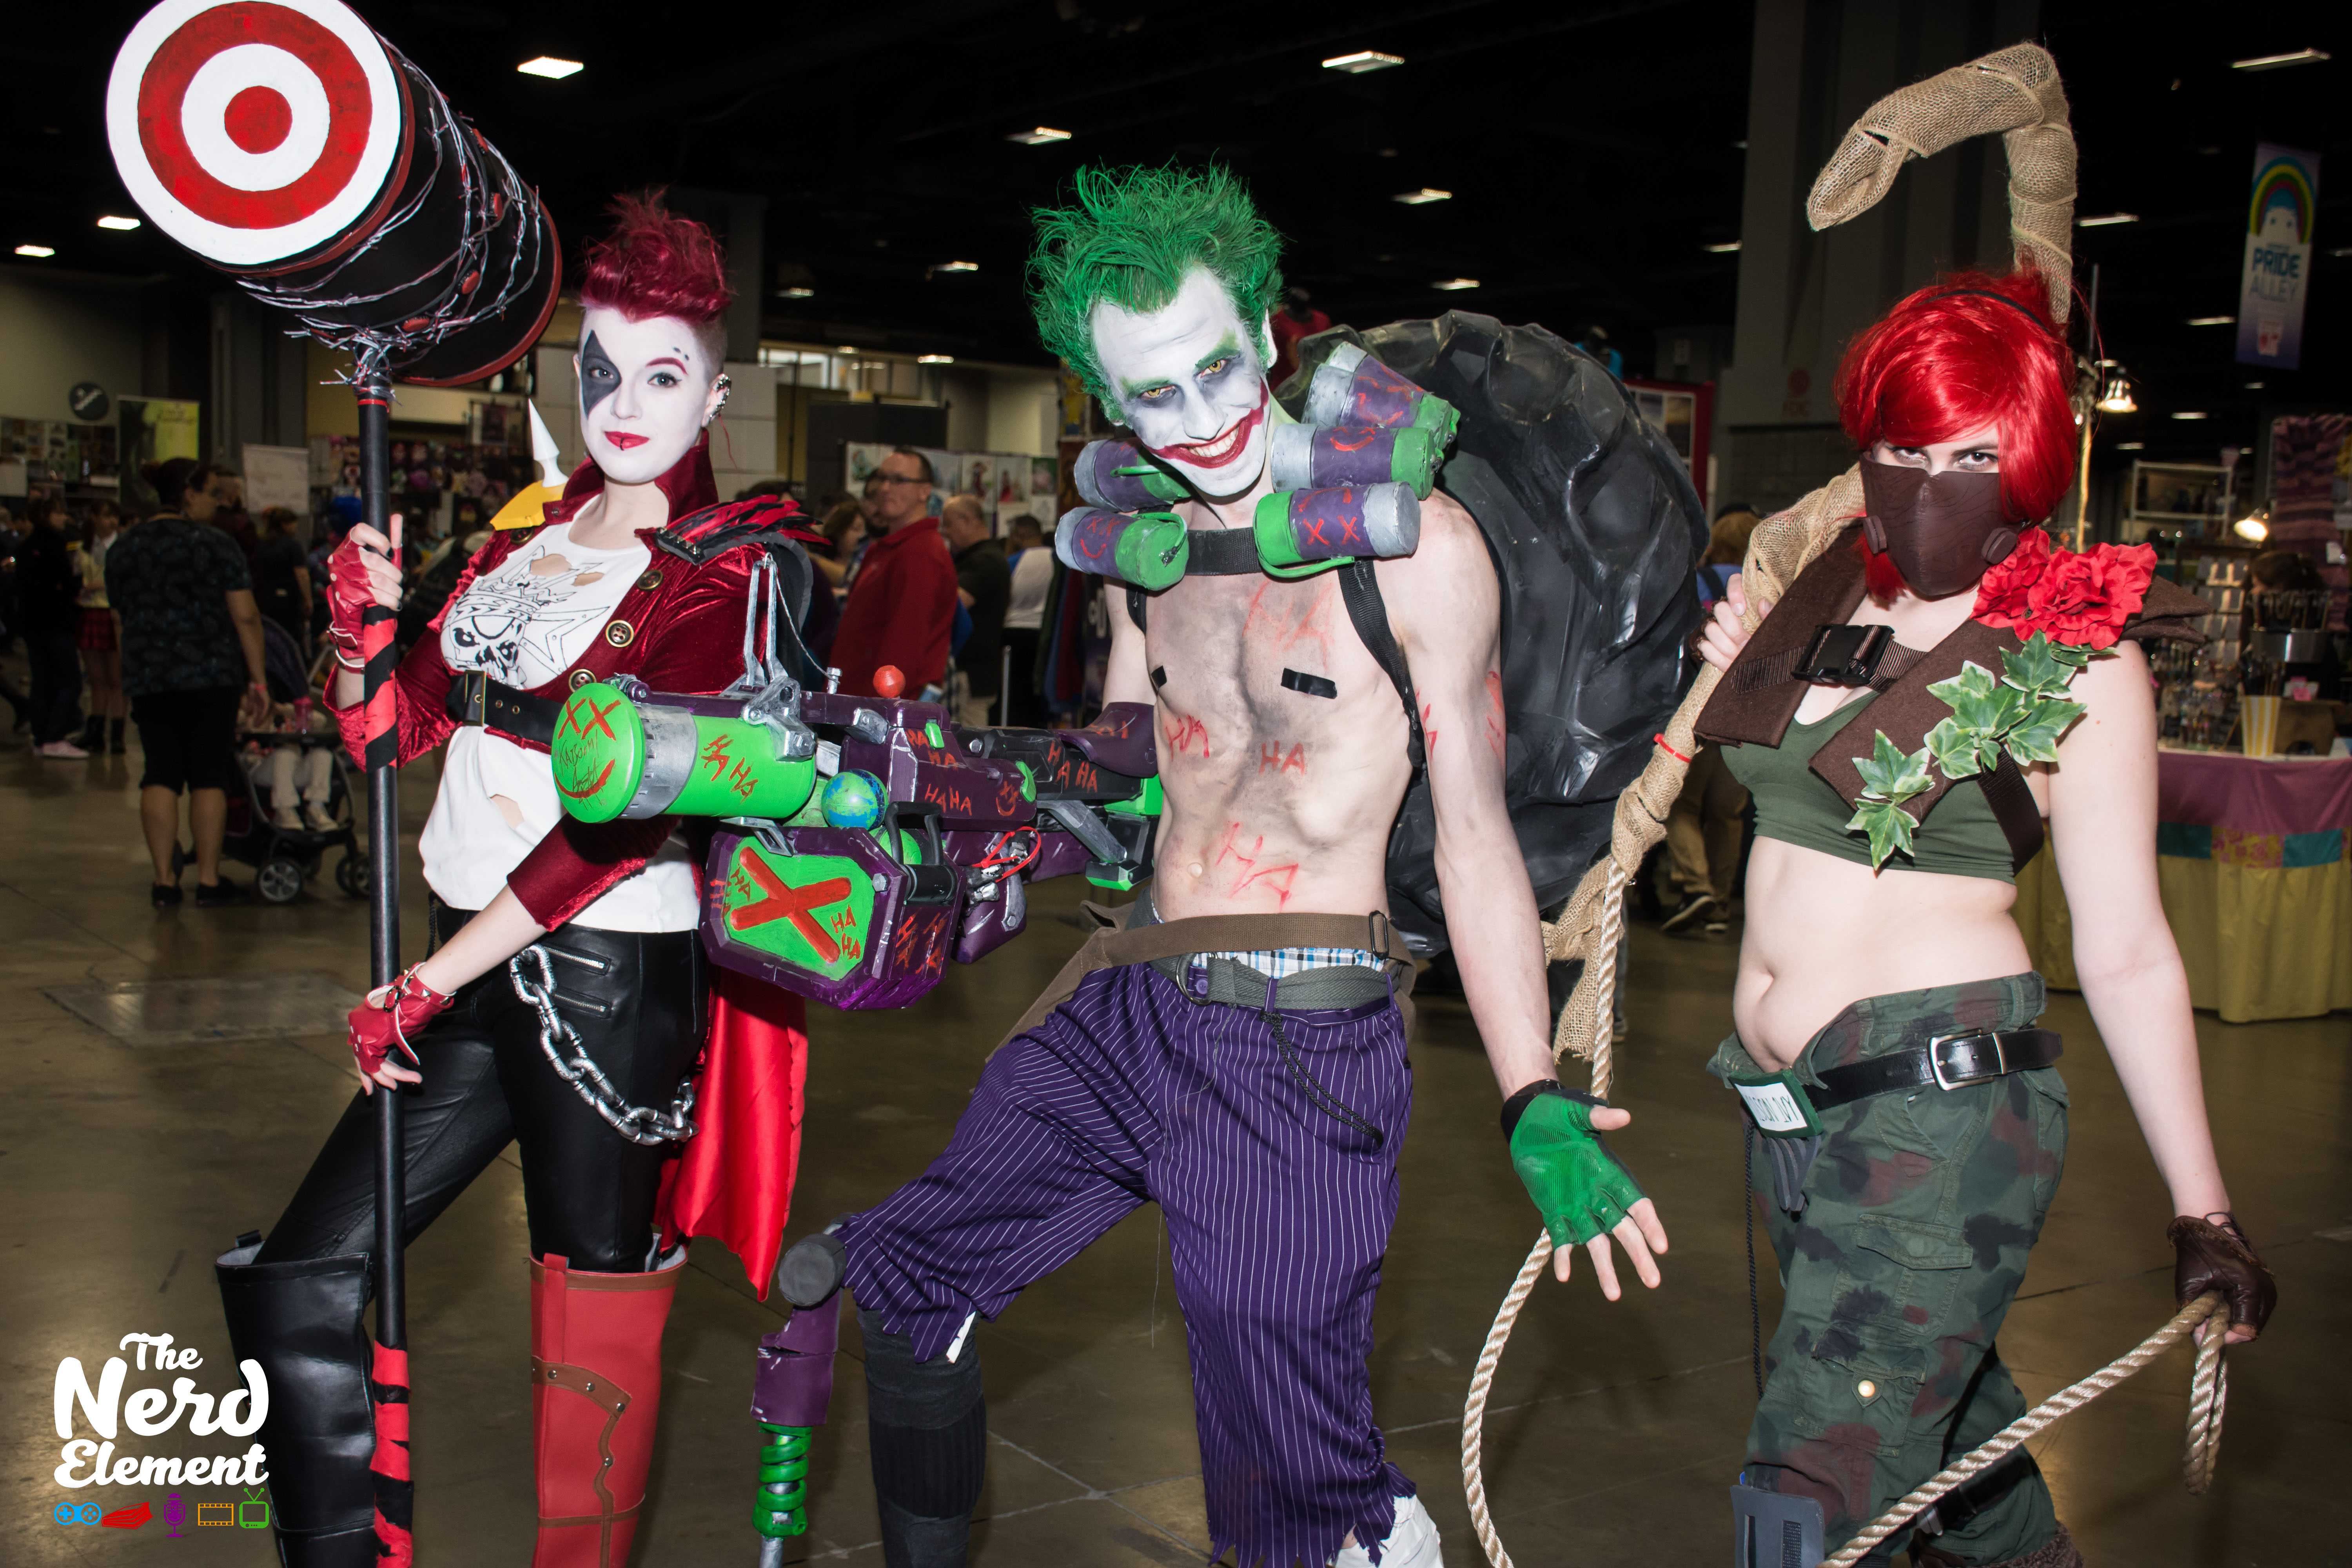 Harley Queen, Jokerat, and Roadrash - DC/Overwatch mashup
Cosplayers: Agentbartoncosplay (ig), Ponzoid (ig), and Roystroyer (ig). 